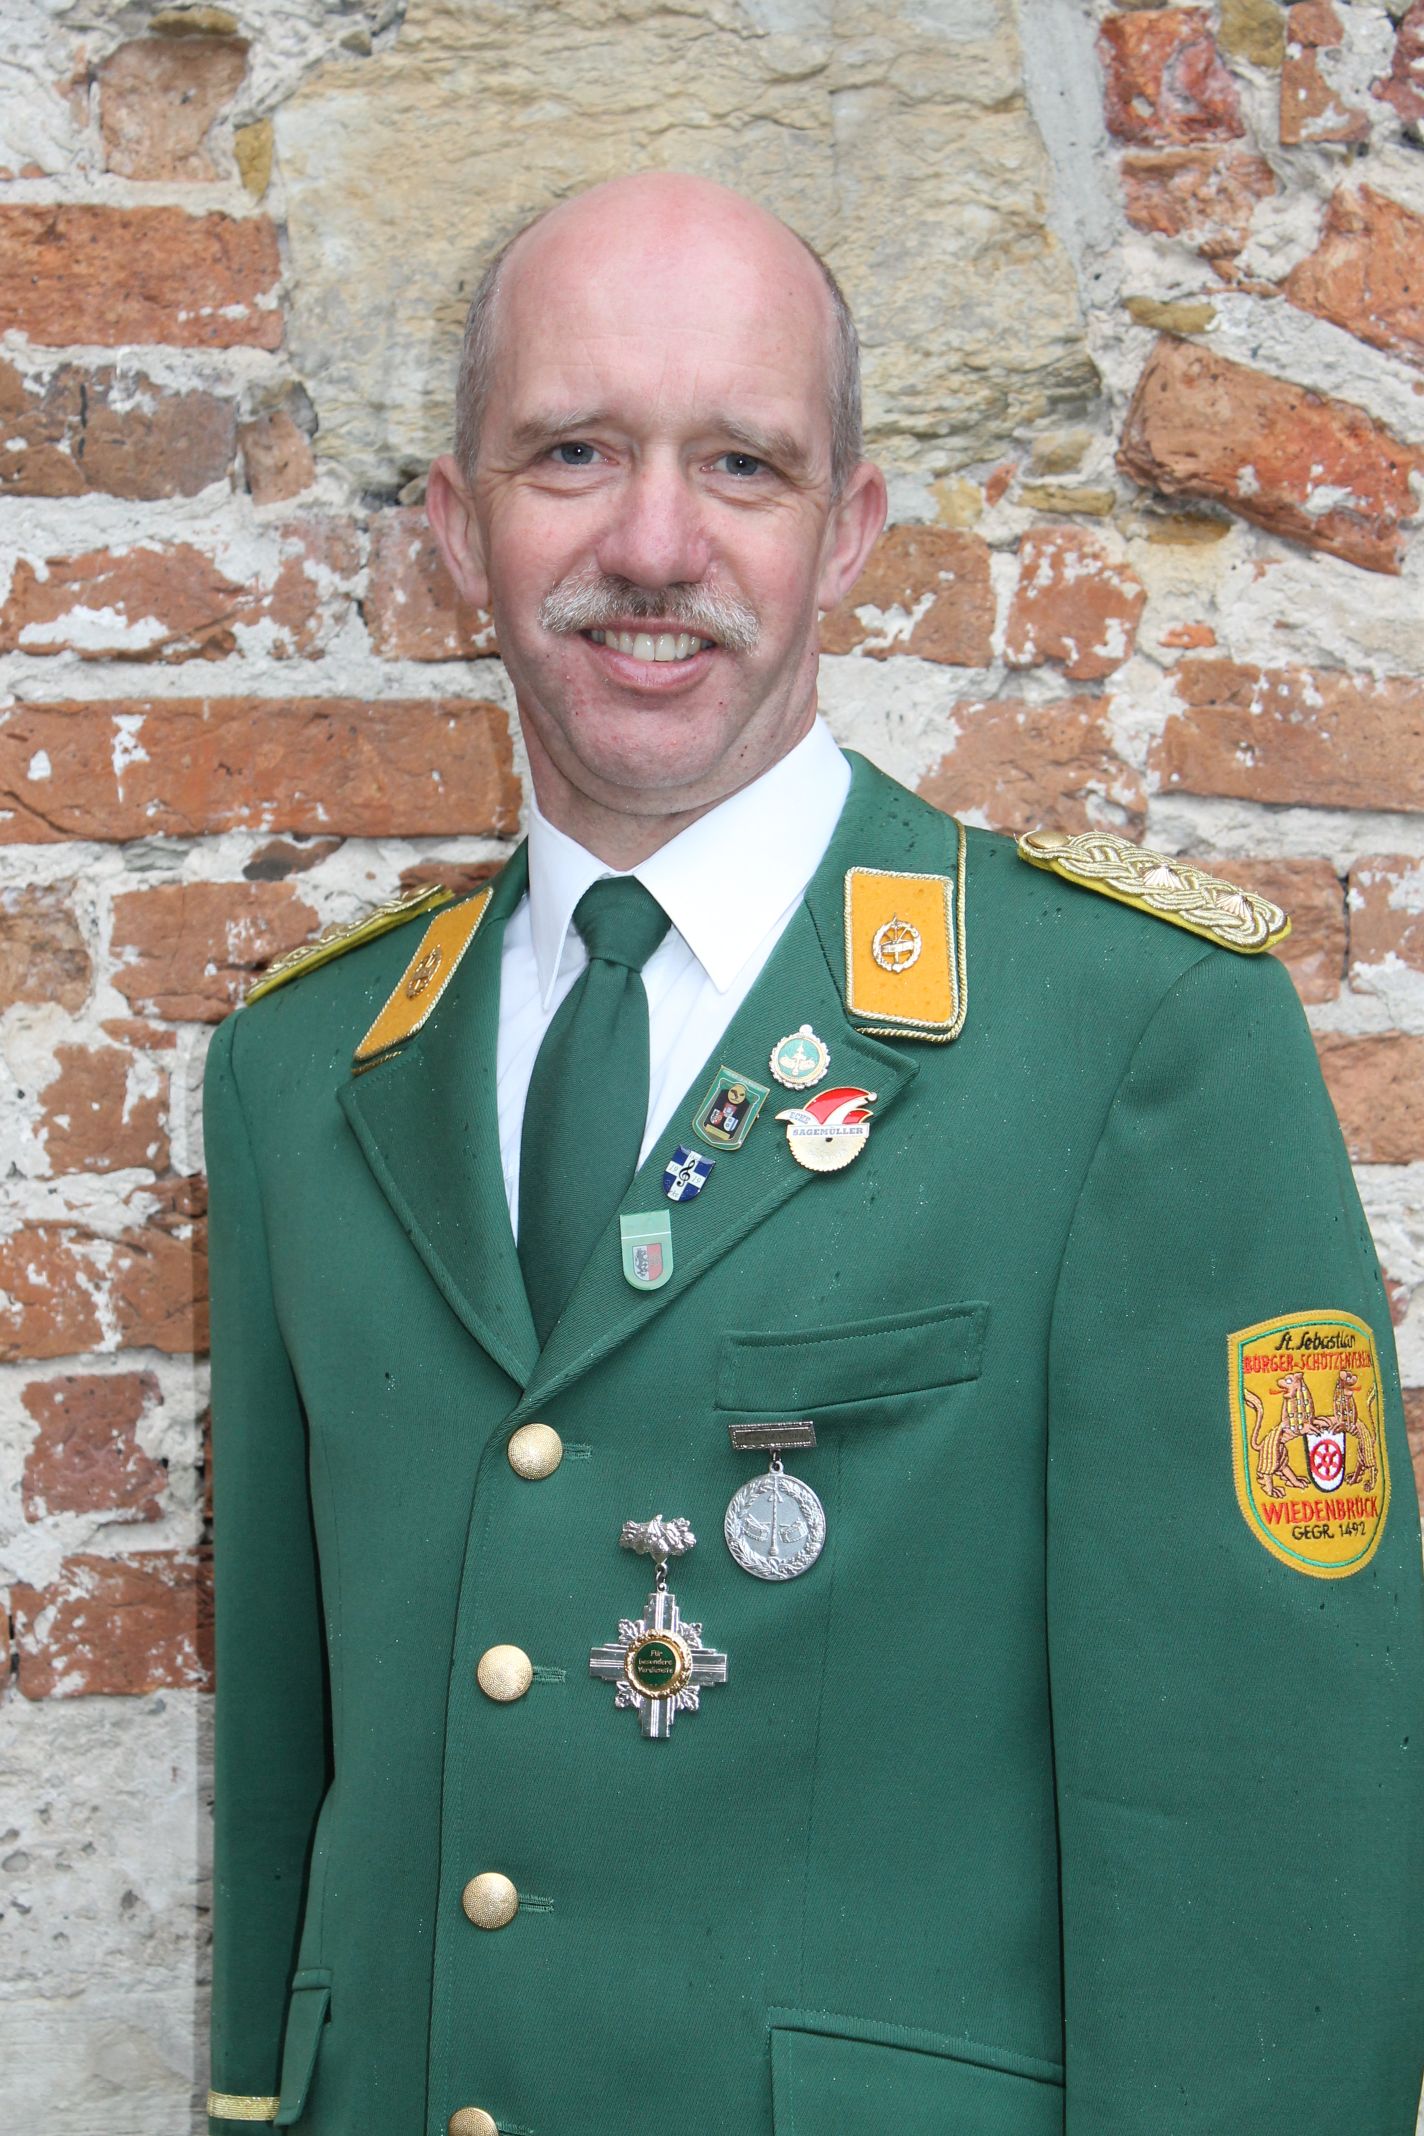 Dieter Gödecke